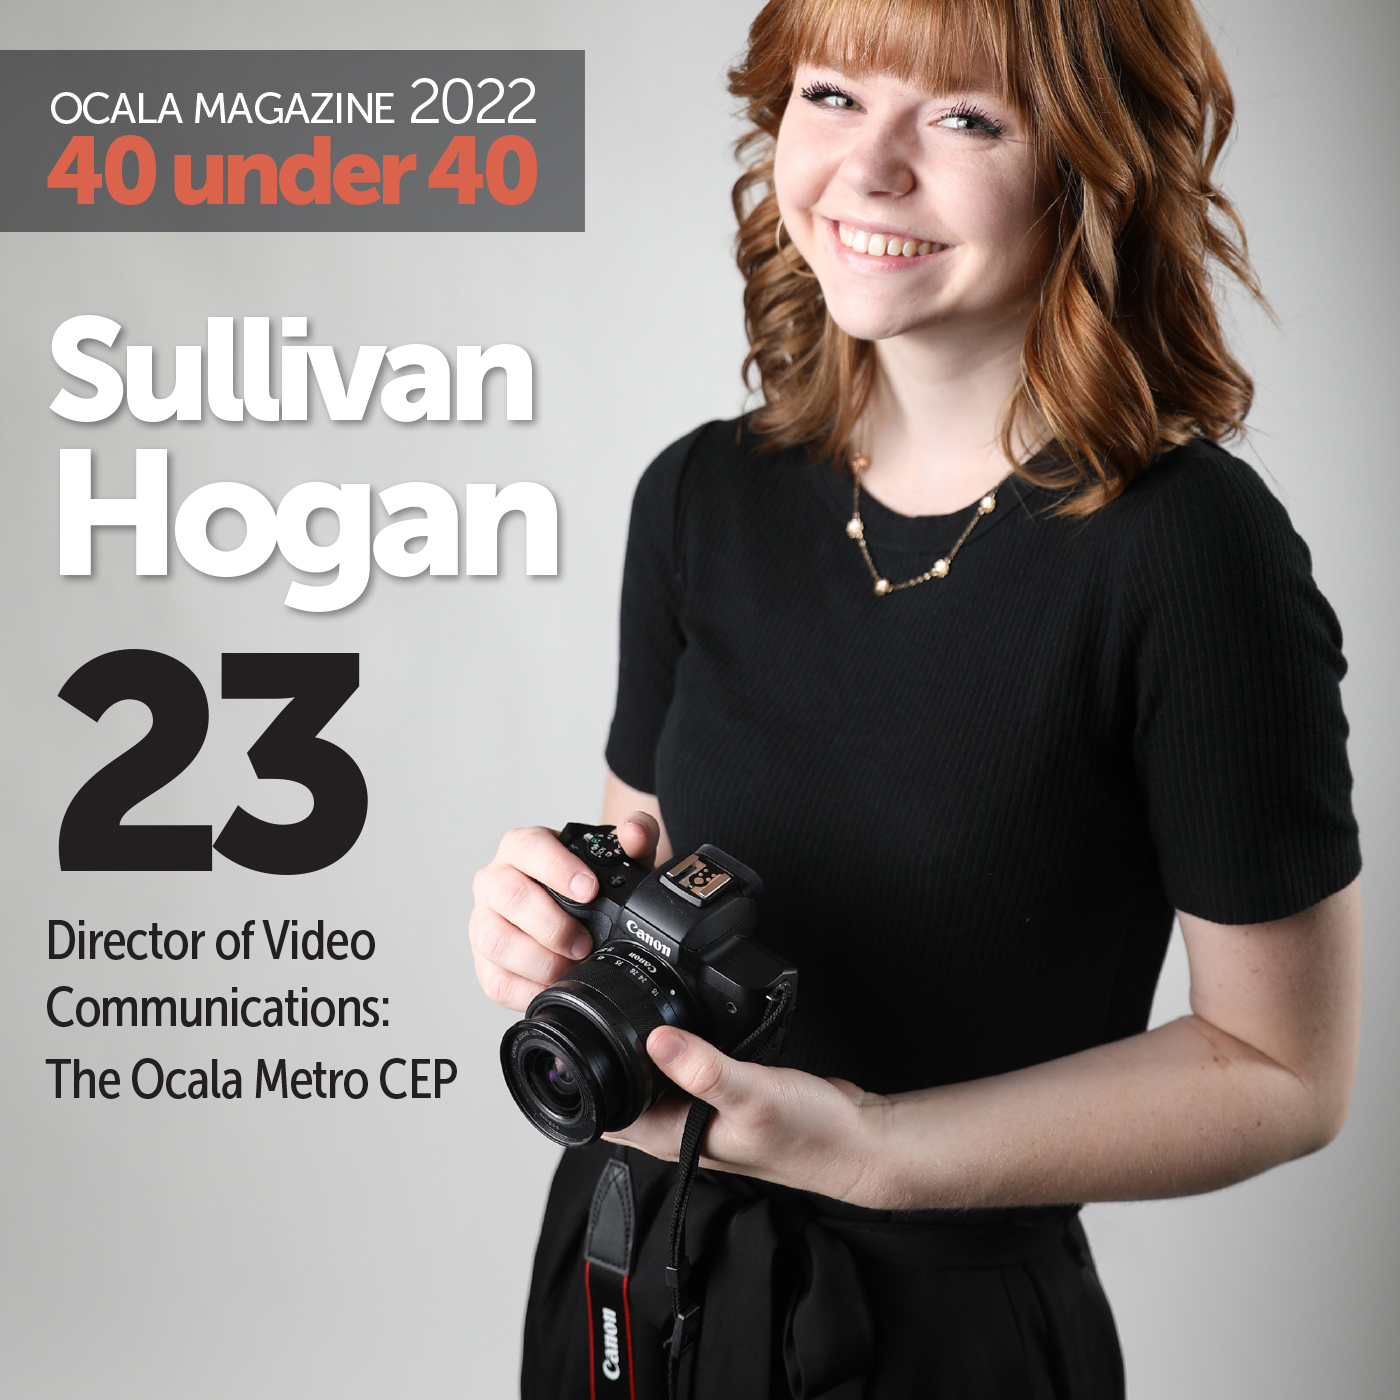 Sullivan Hogan Ocala Magazine 2022 40 under 40